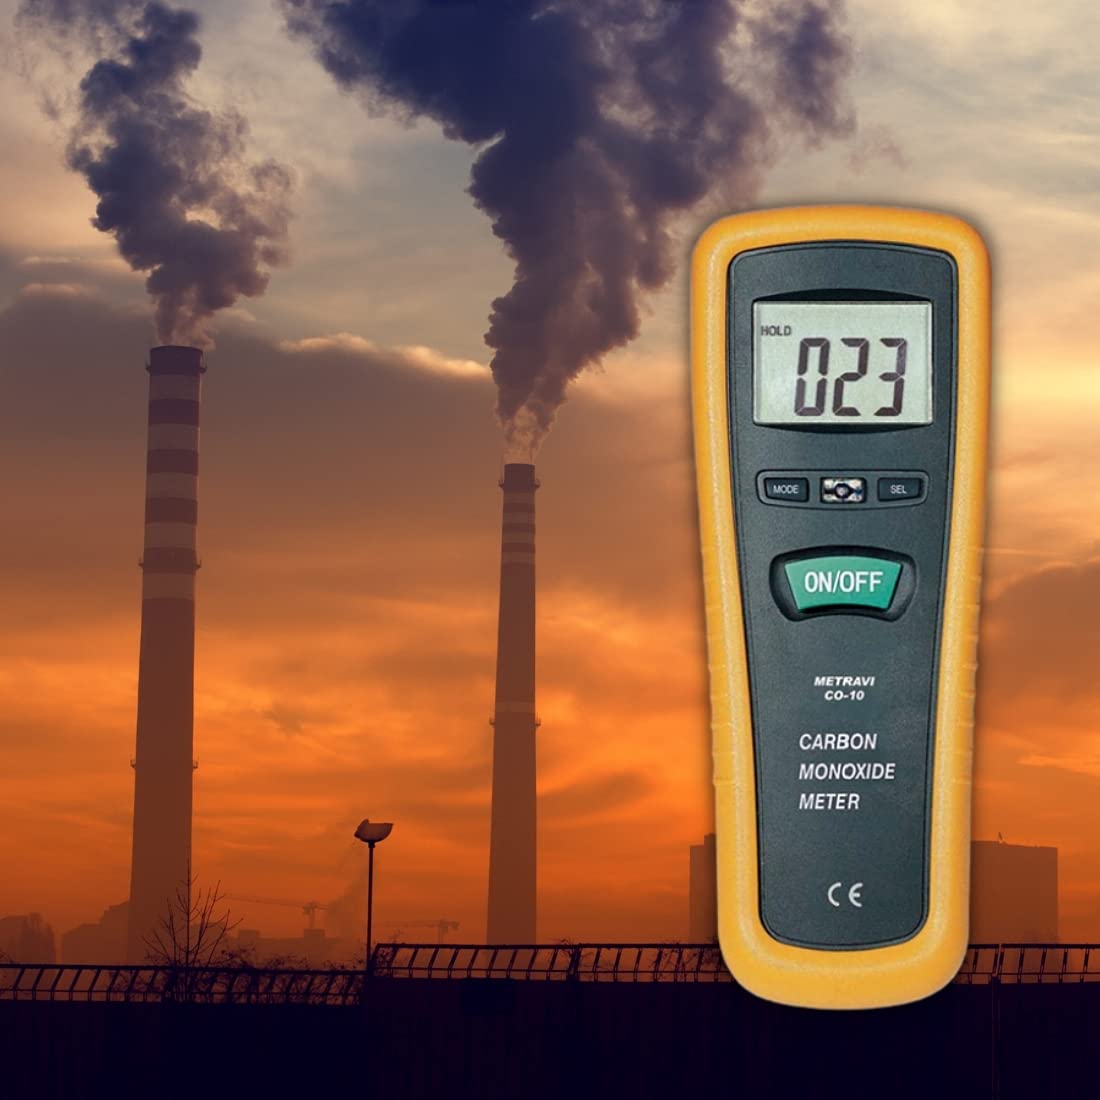 Metravi CO-10 Carbon Mono Oxide Meter/Detector with Audio & Buzzer Alarm